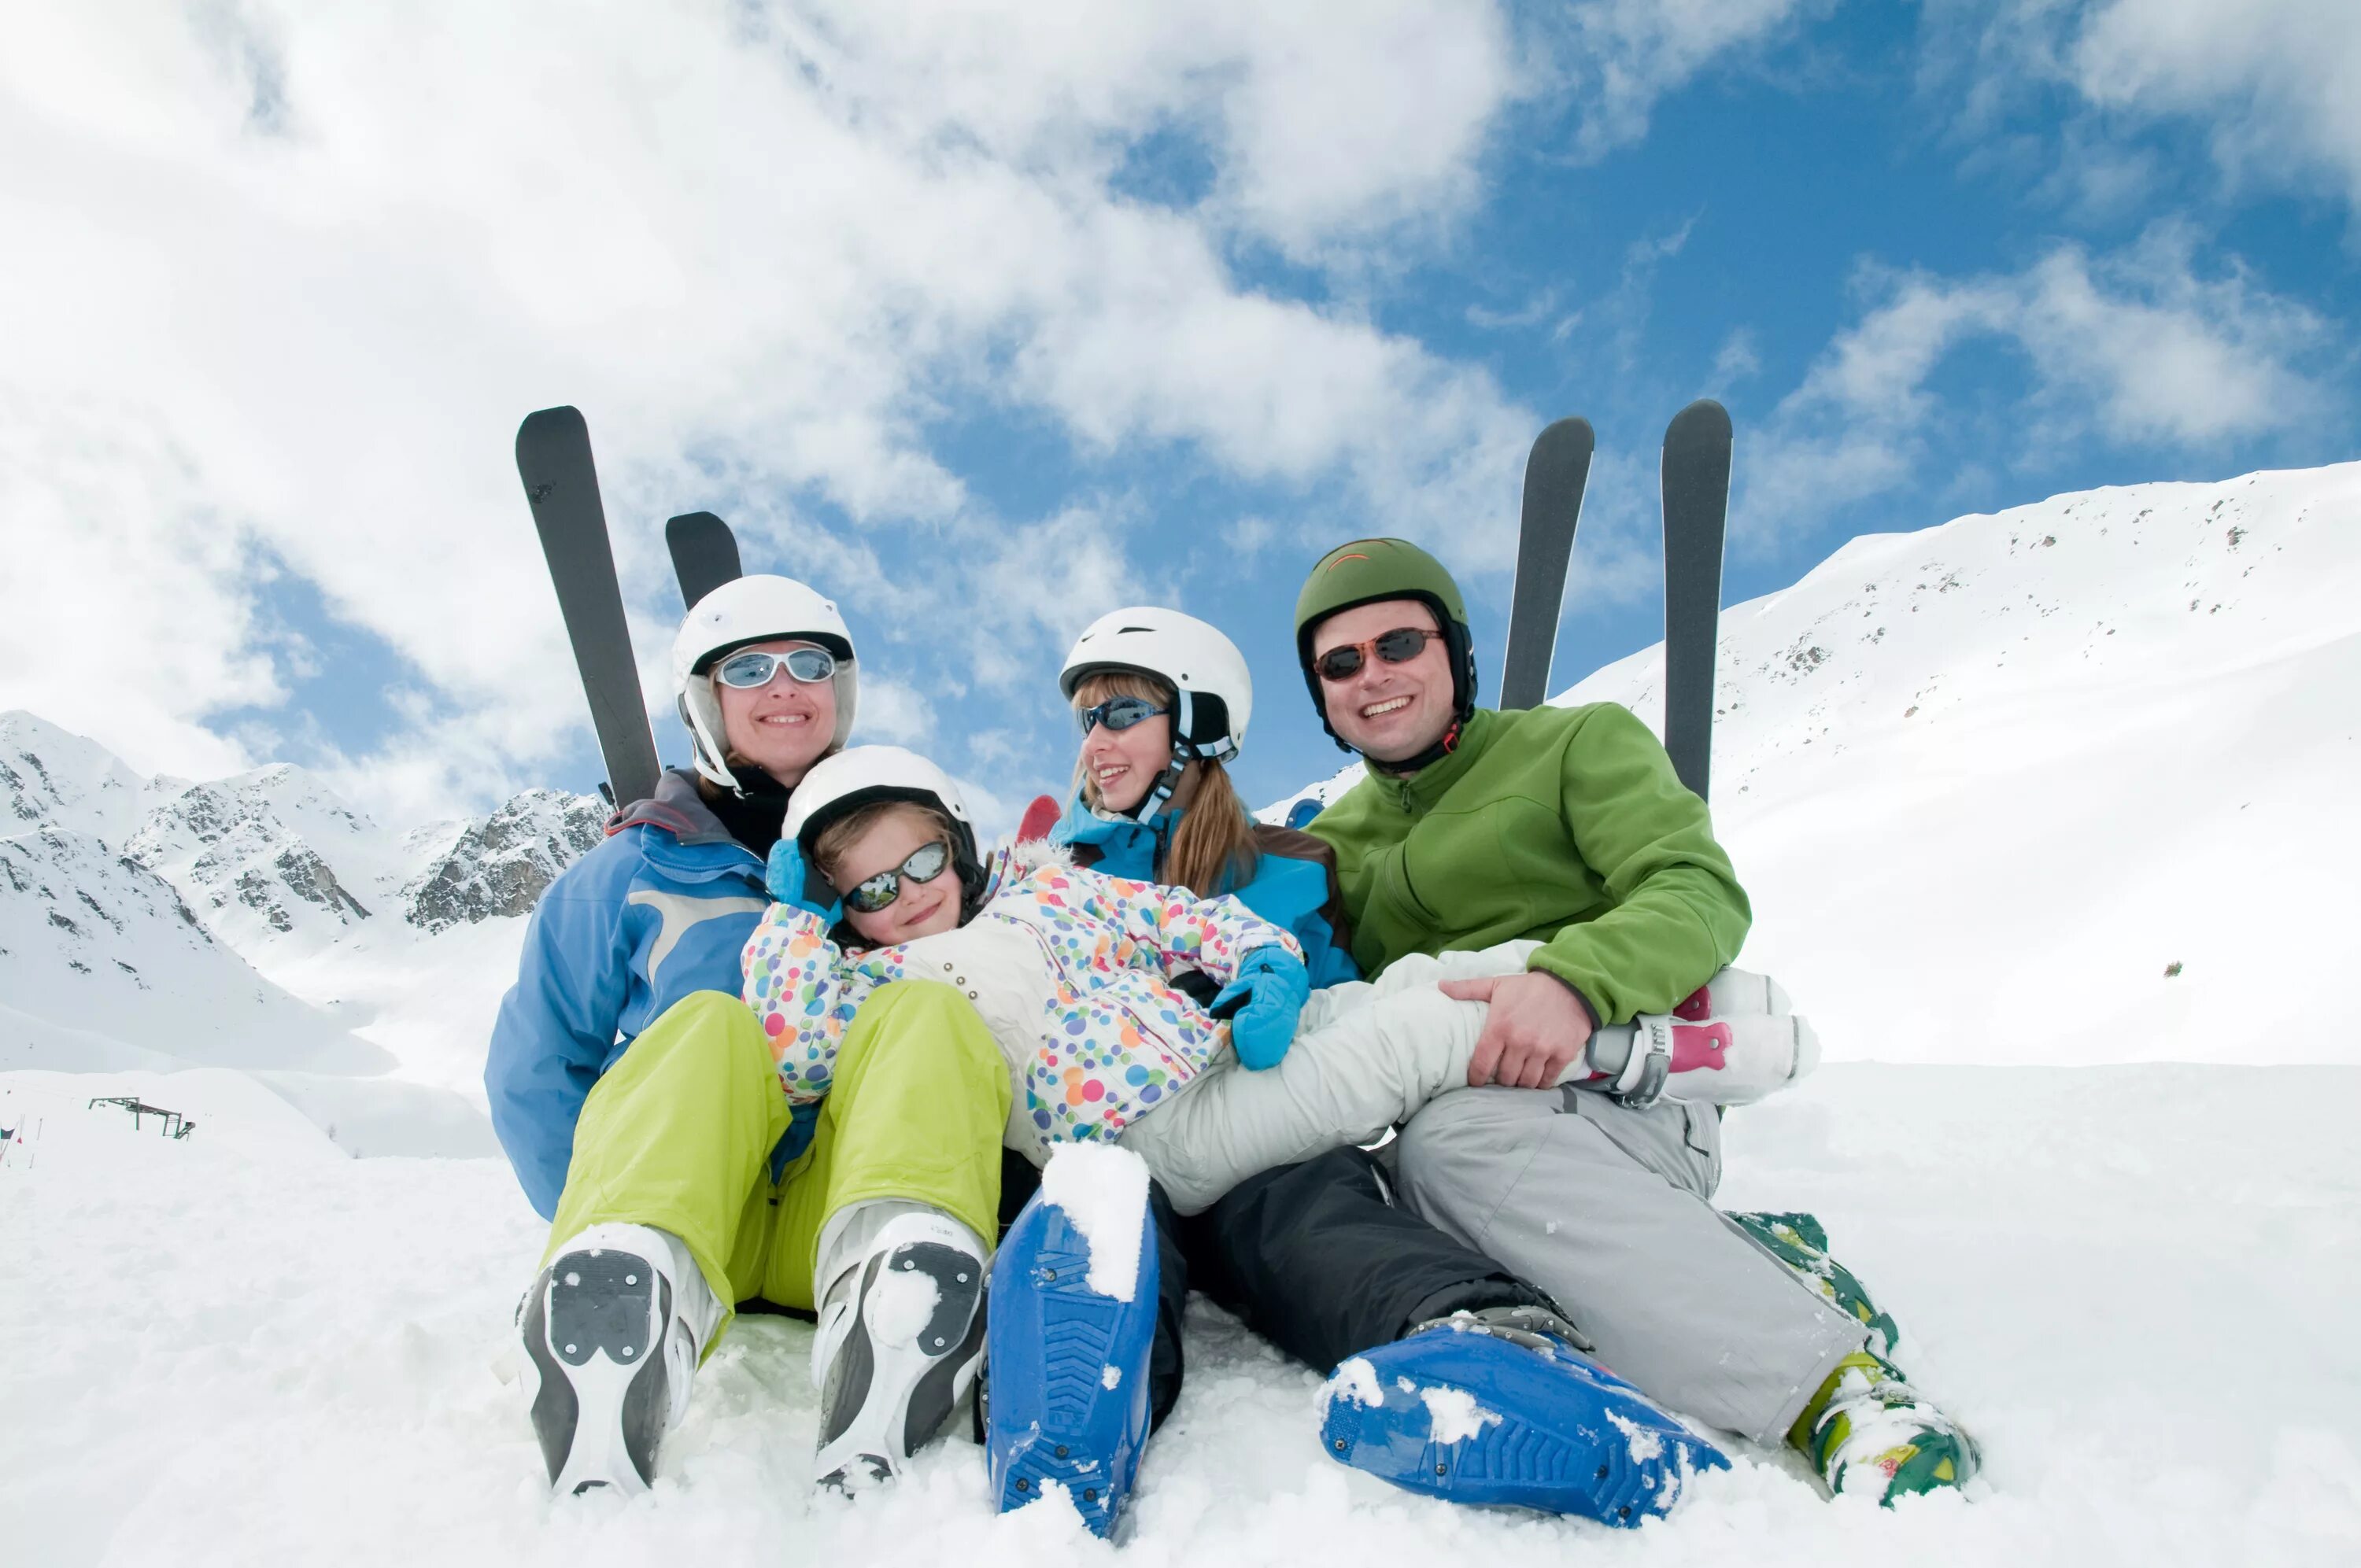 Ski fun. Семья на горных лыжах. Семья на горнолыжном курорте. Семья зима. Семья в горнолыжных костюмах.